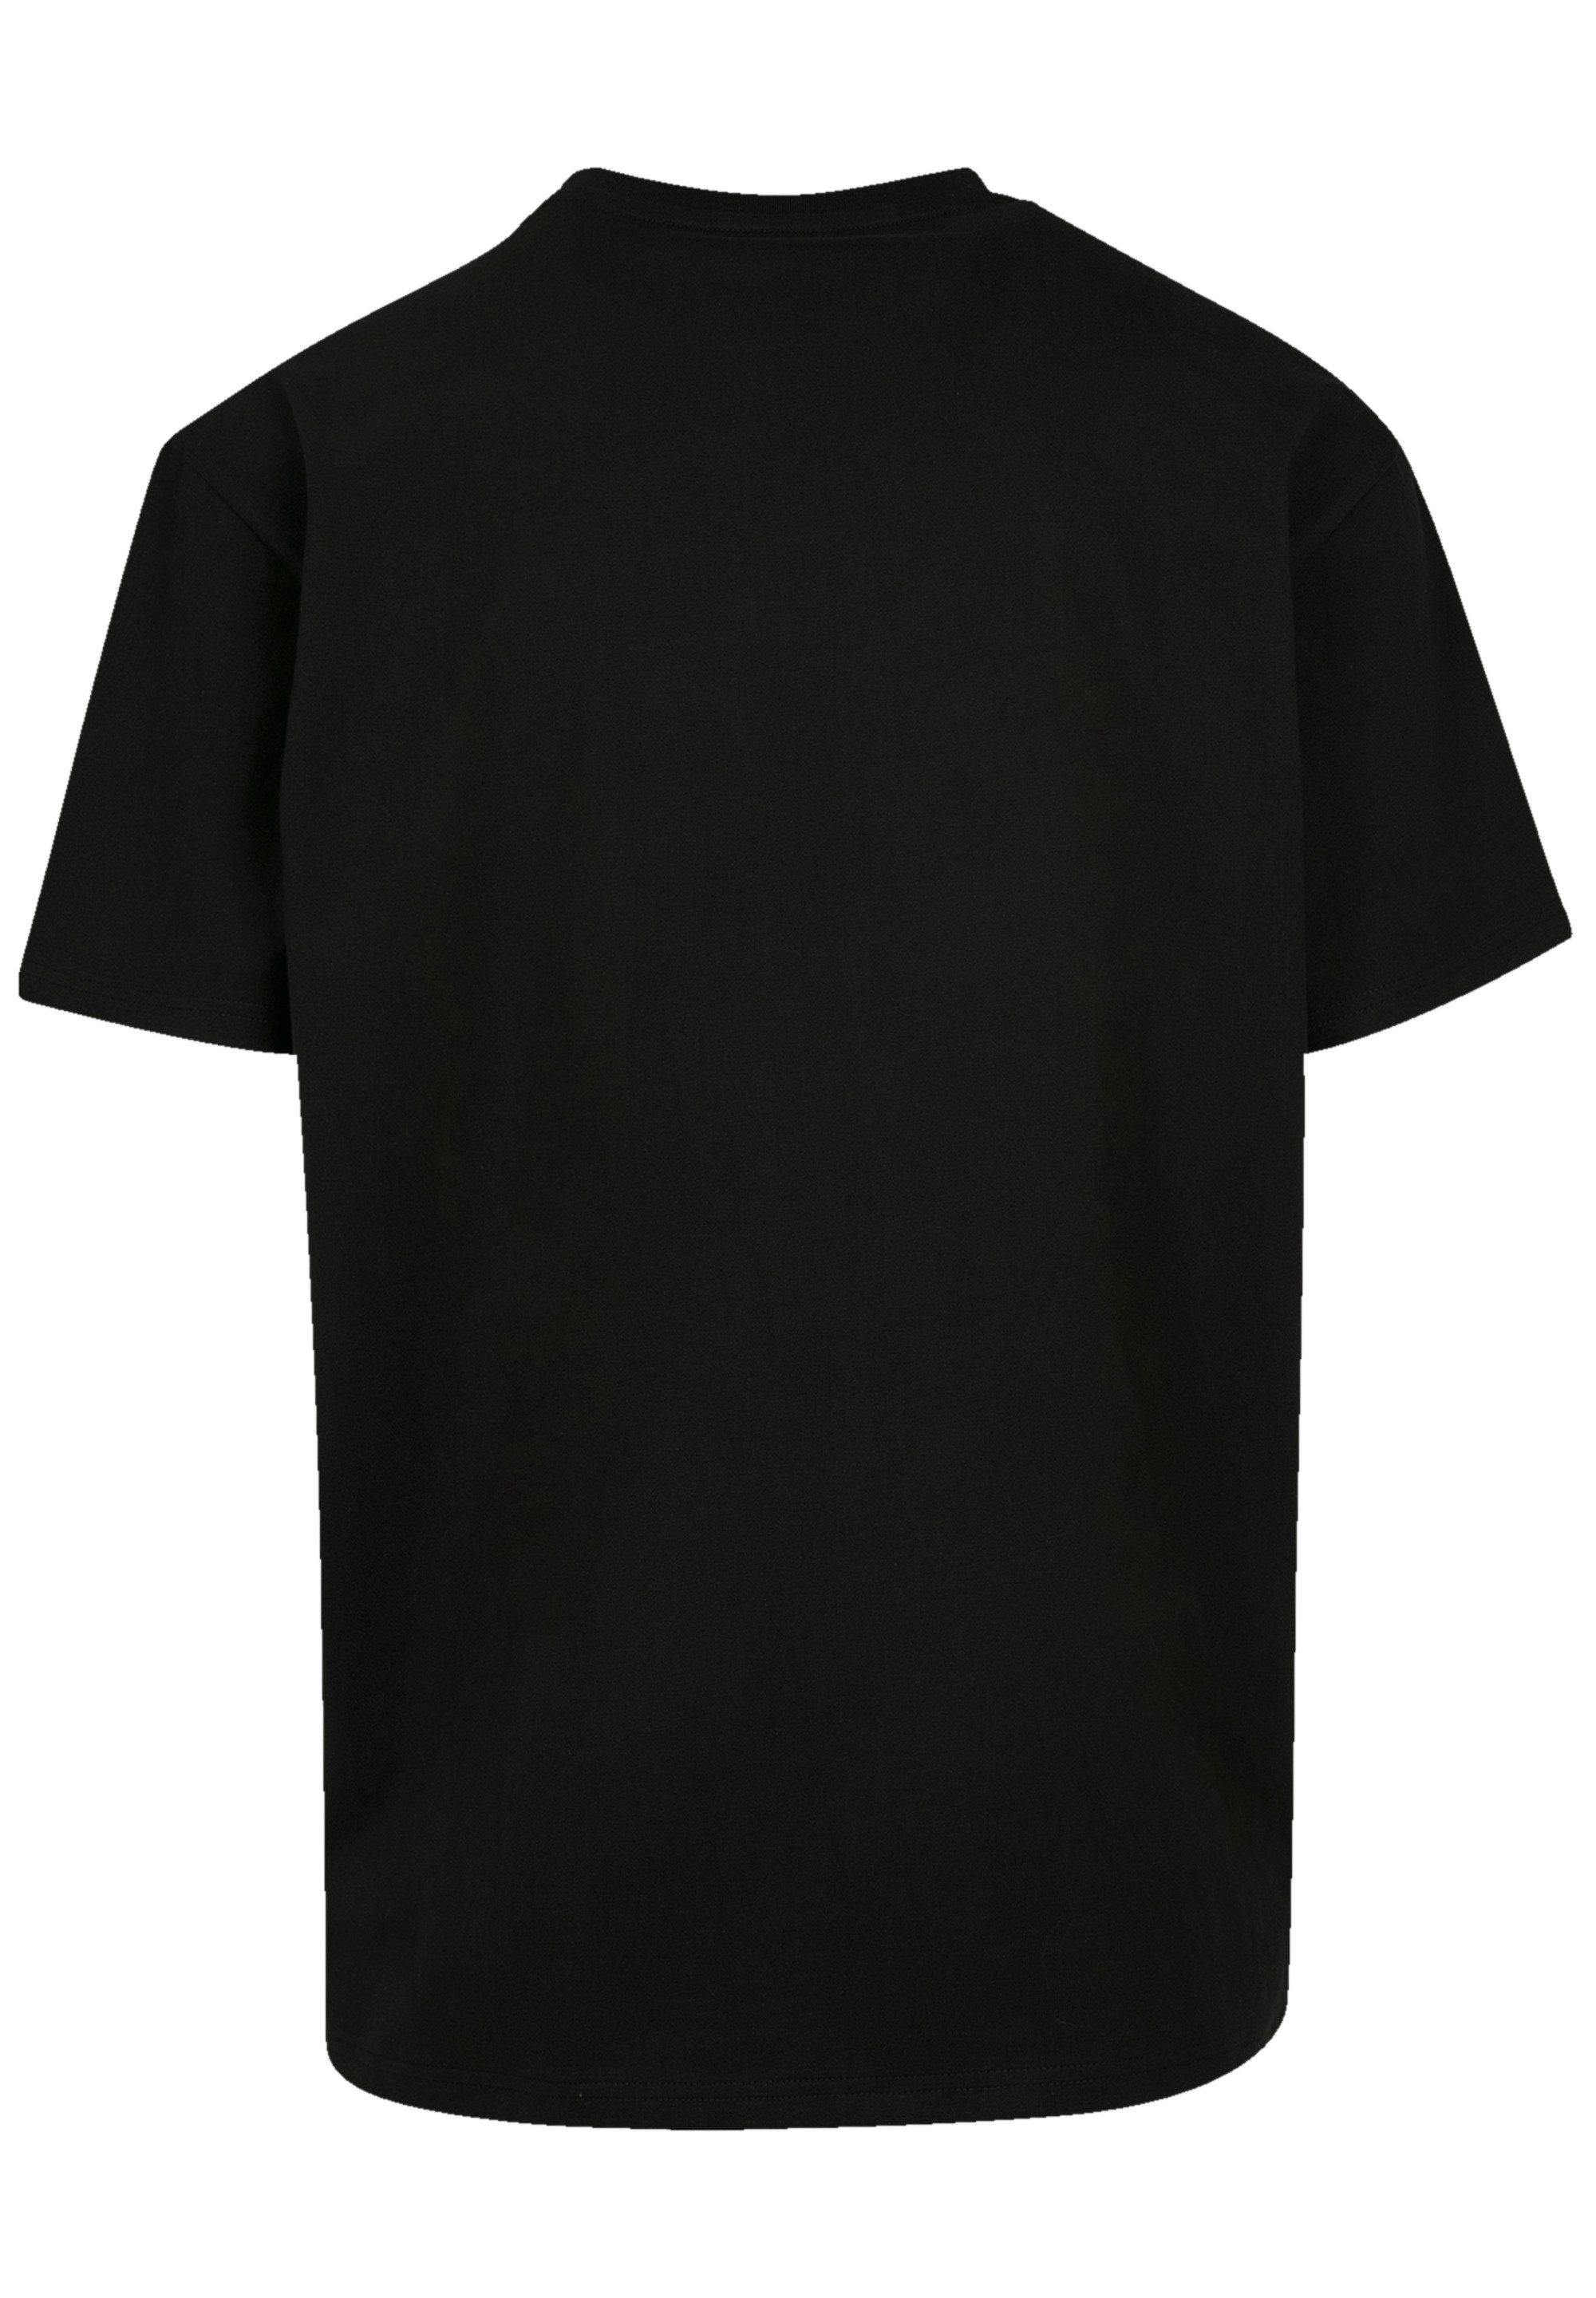 schwarz T-Shirt Logo EPYX Print F4NT4STIC WHT